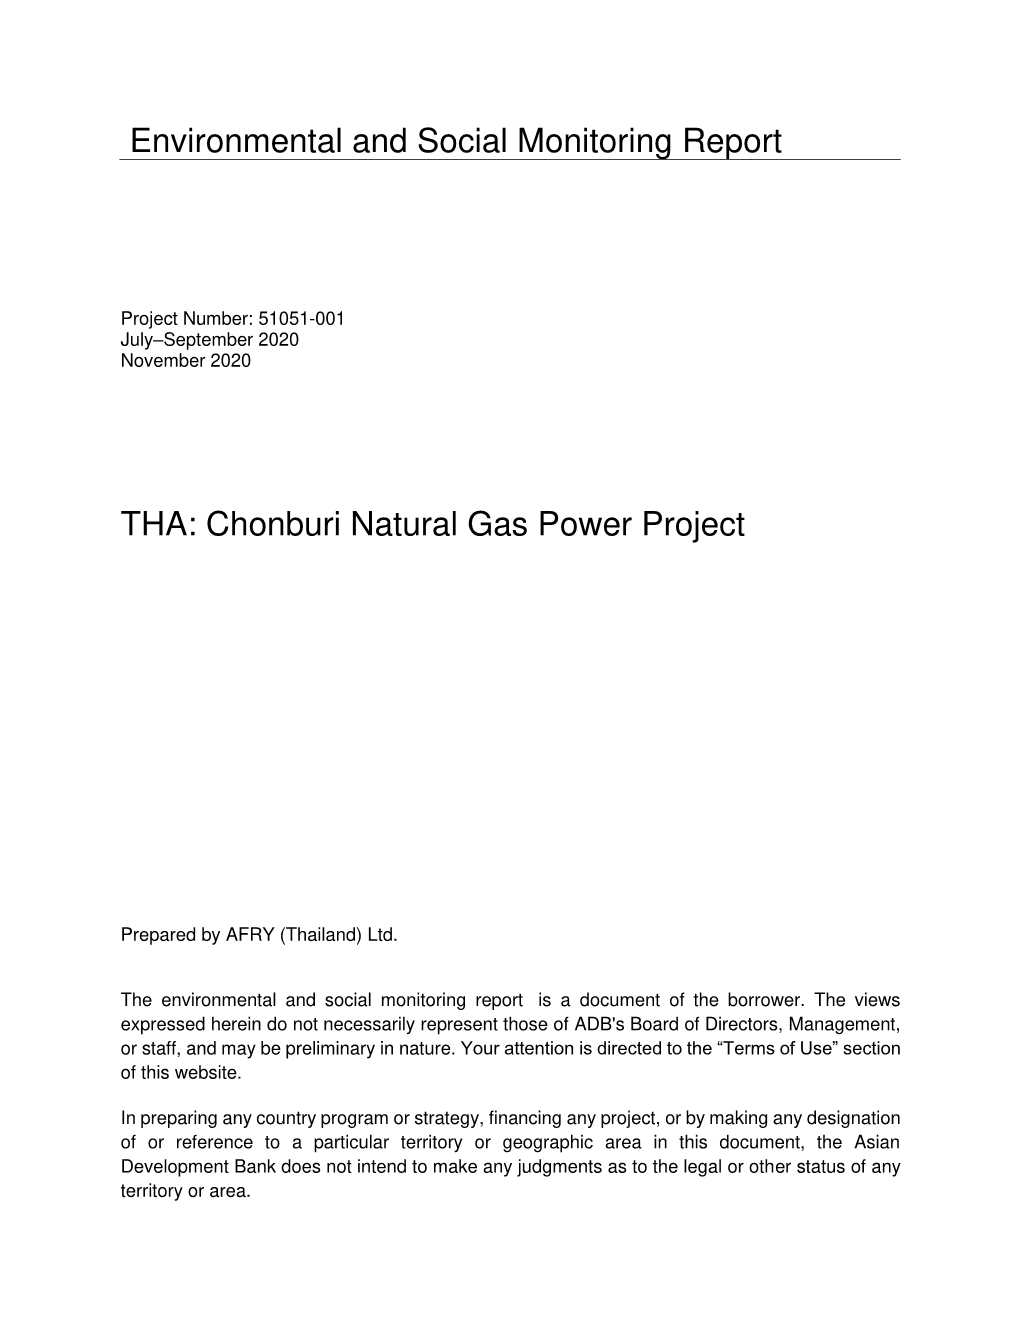 Chonburi Natural Gas Power Project